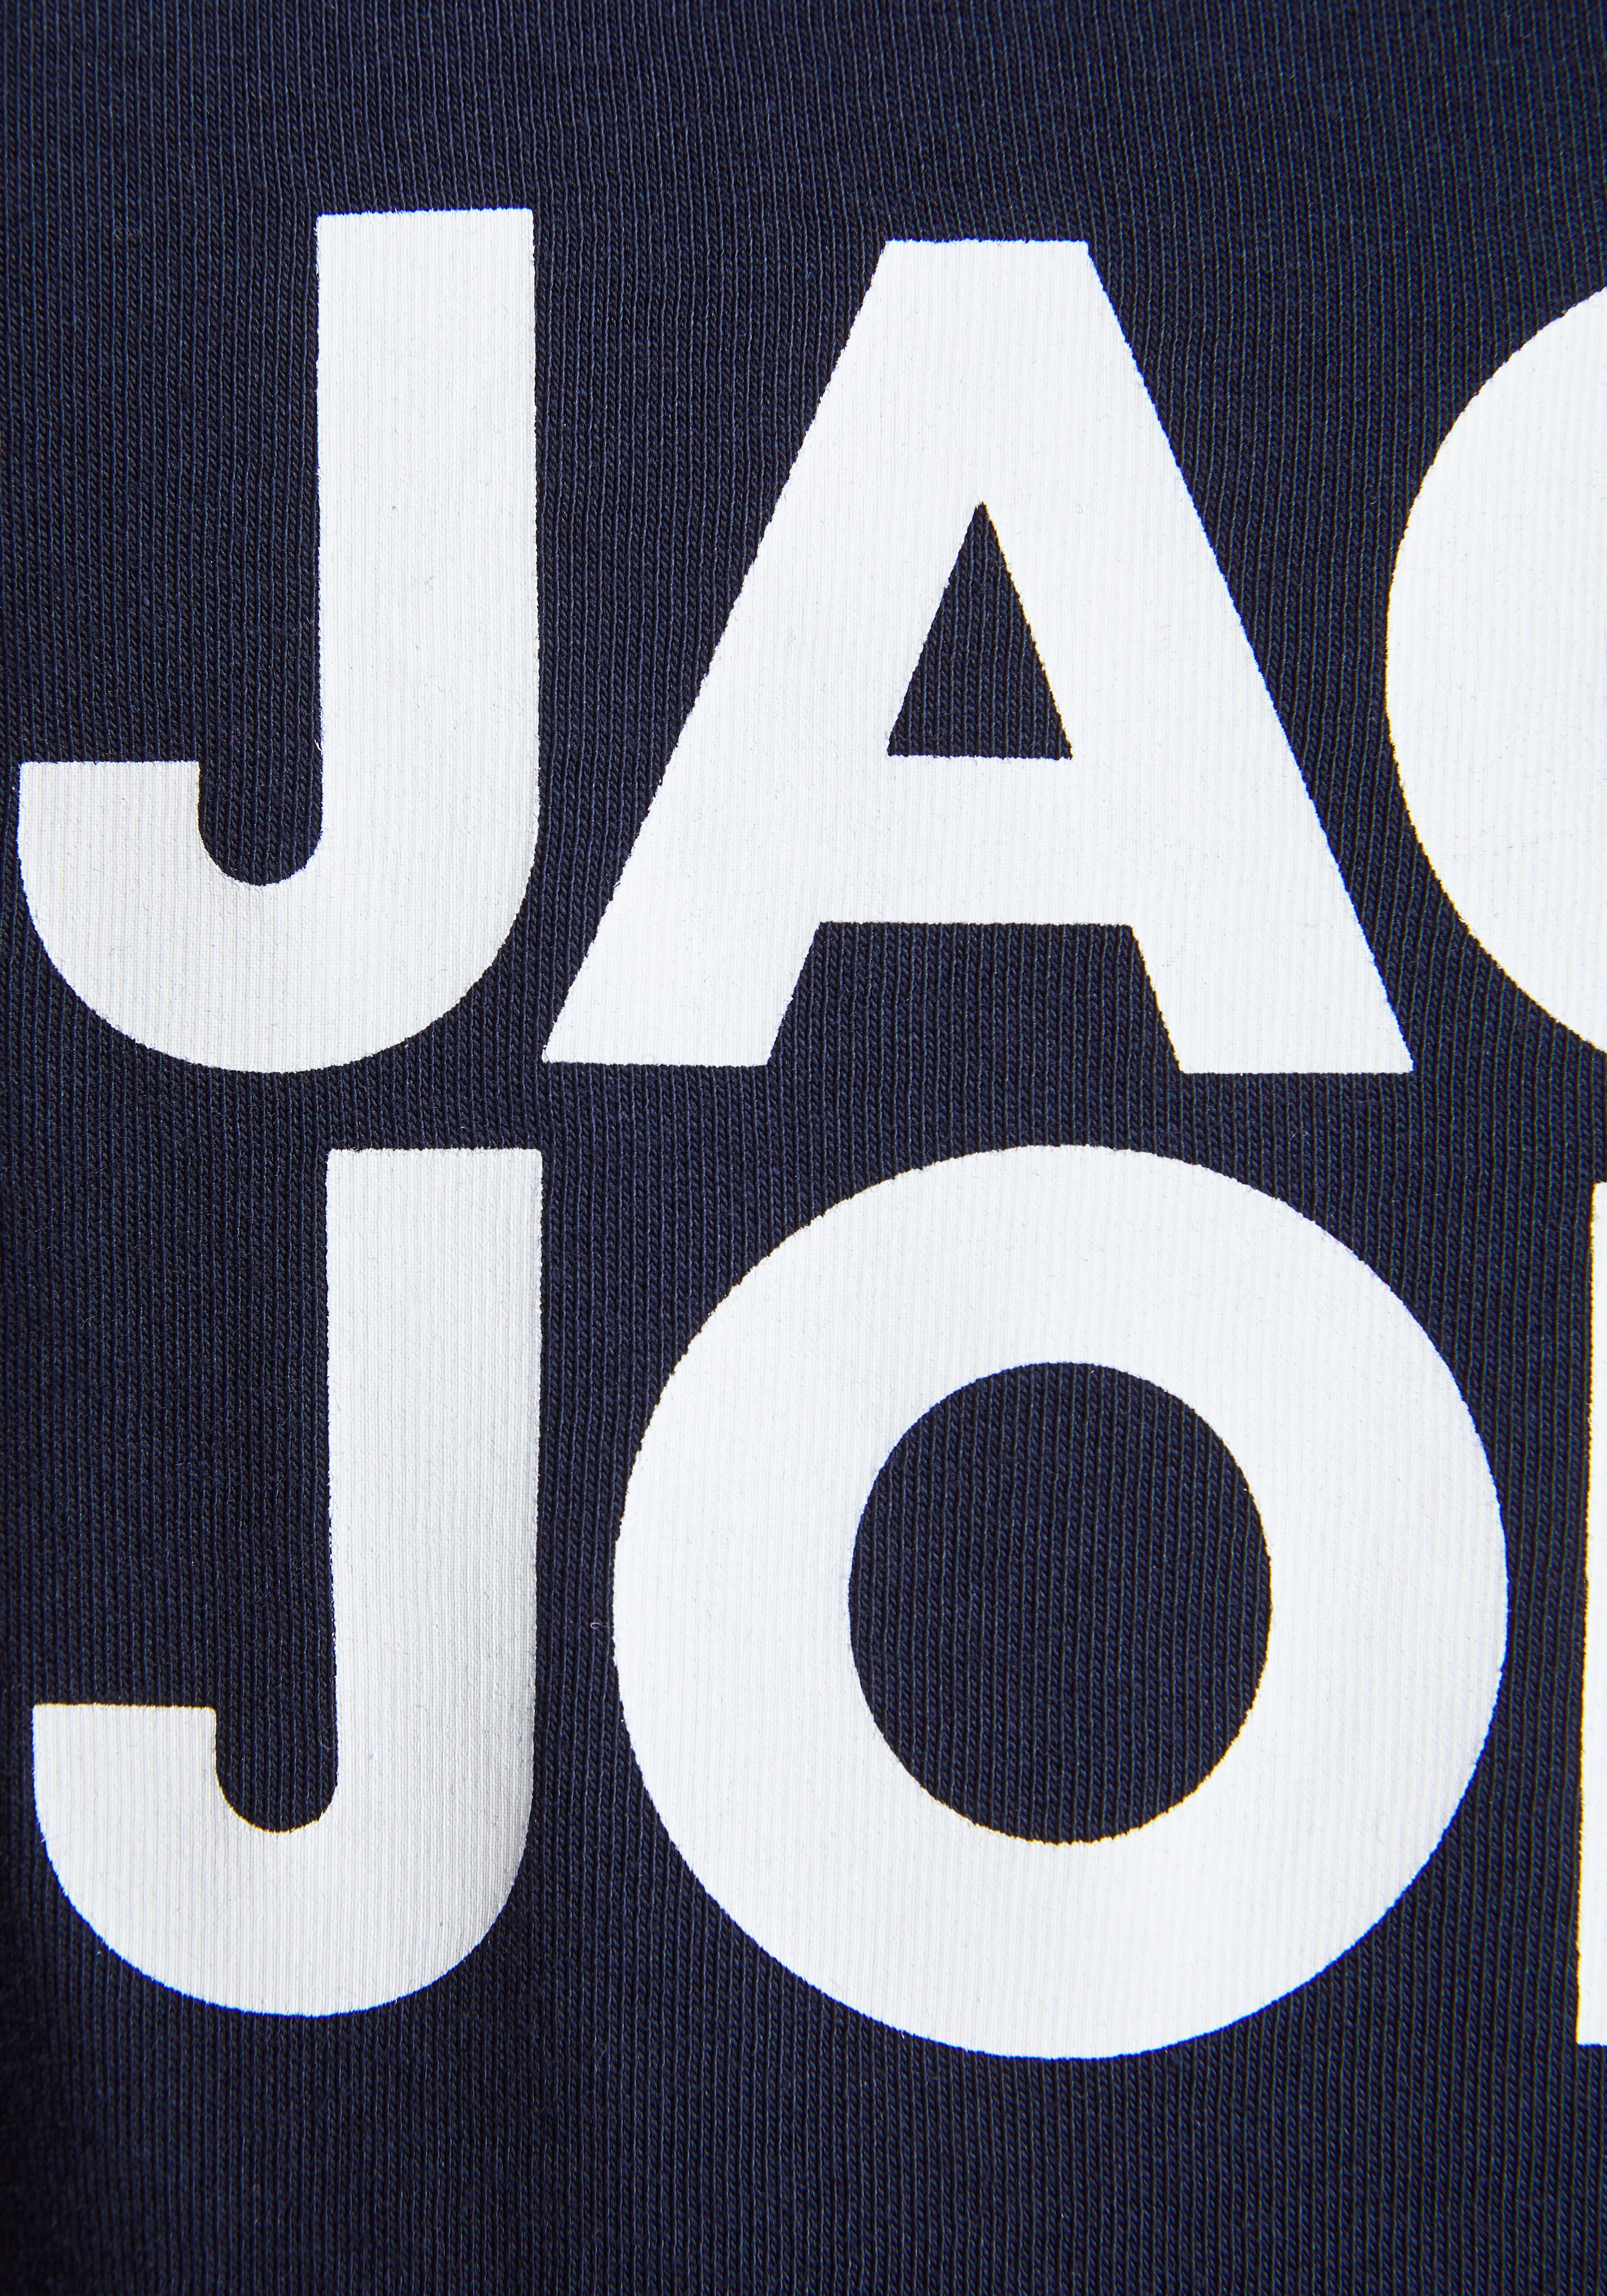 blazer/Large Jack & Junior T-Shirt navy Print Jones